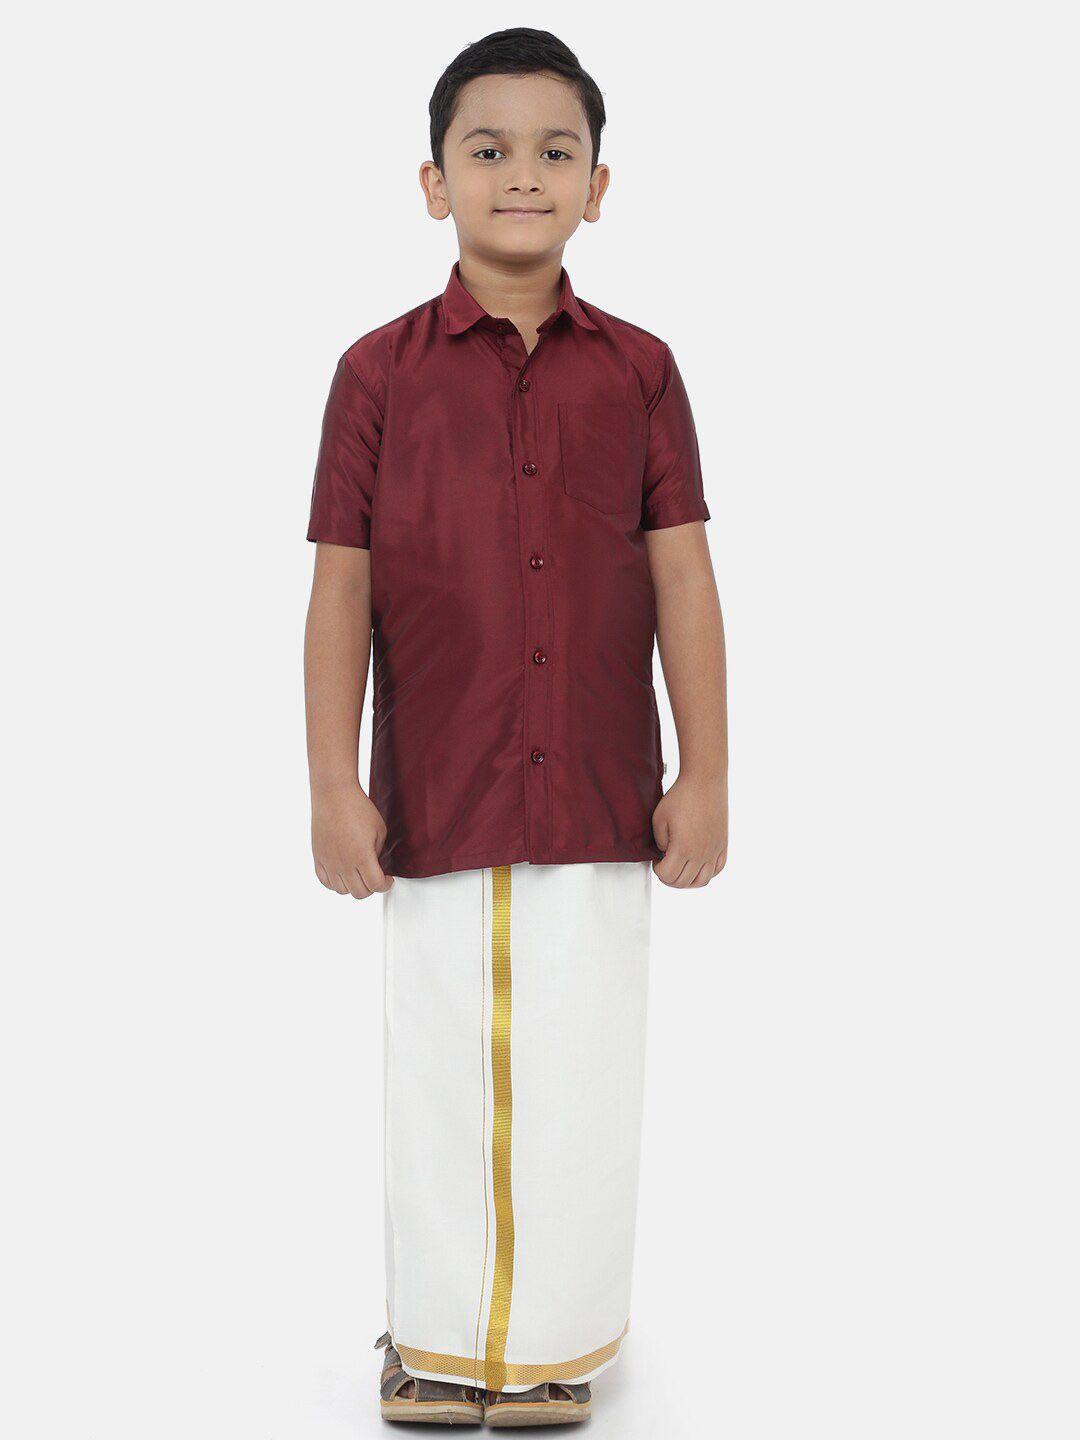 littlestars boys maroon & white shirt with dhoti